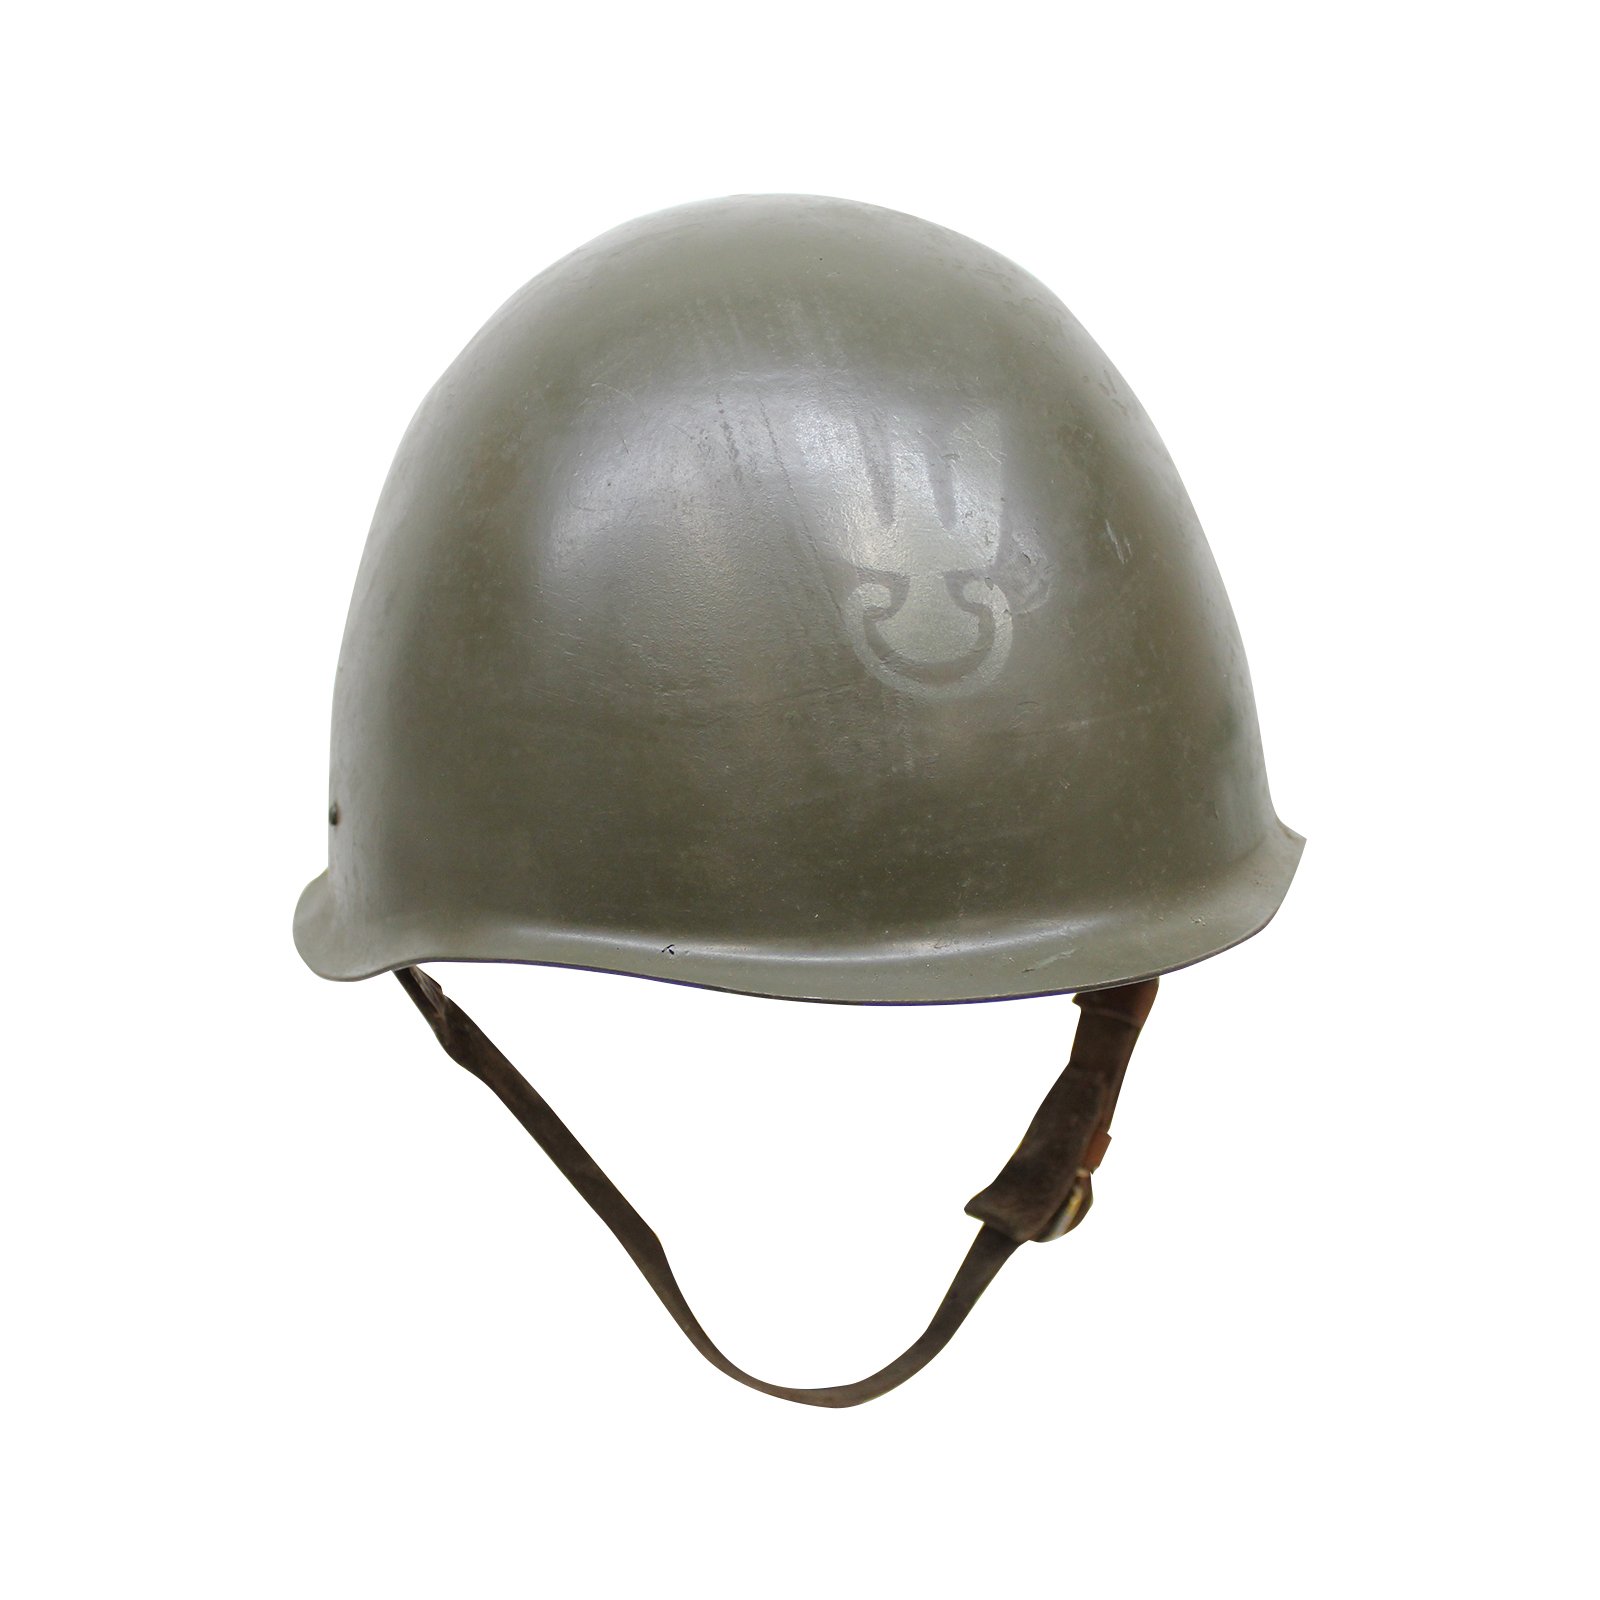 Original Polish summer tank helmet military suplus 